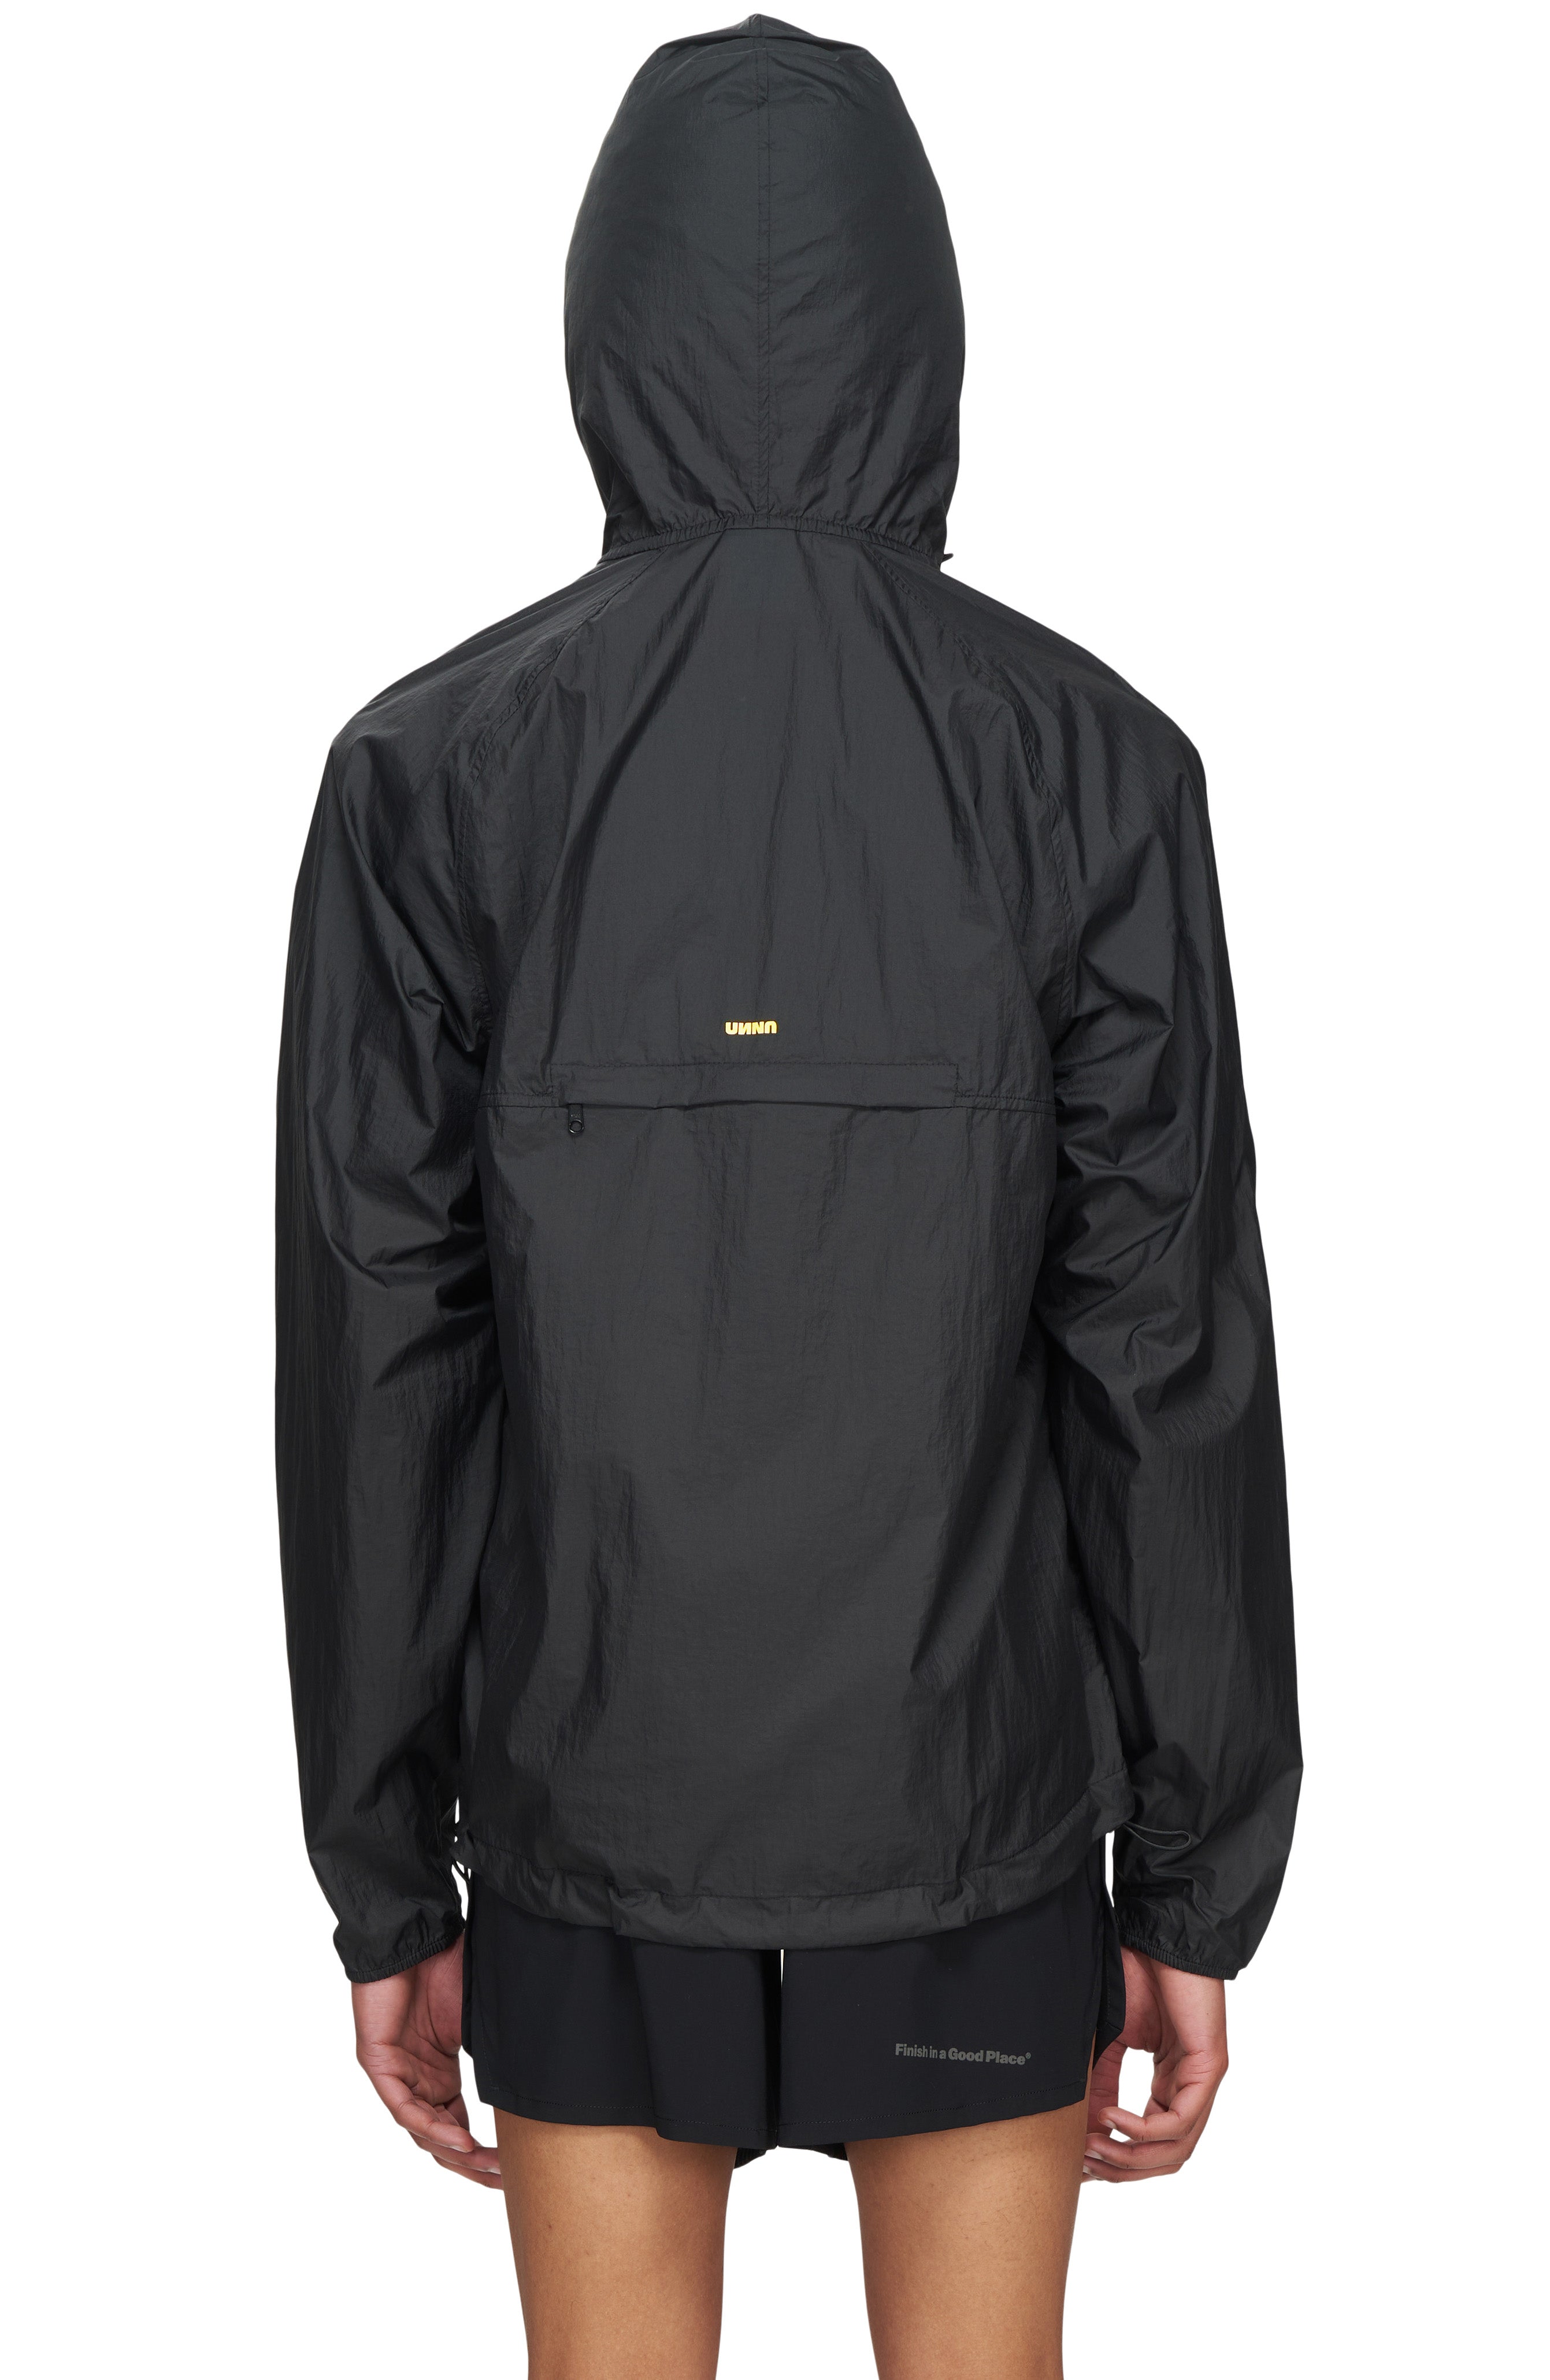 Lightweight running jacket in black - UNNA Smiles Run Jacket